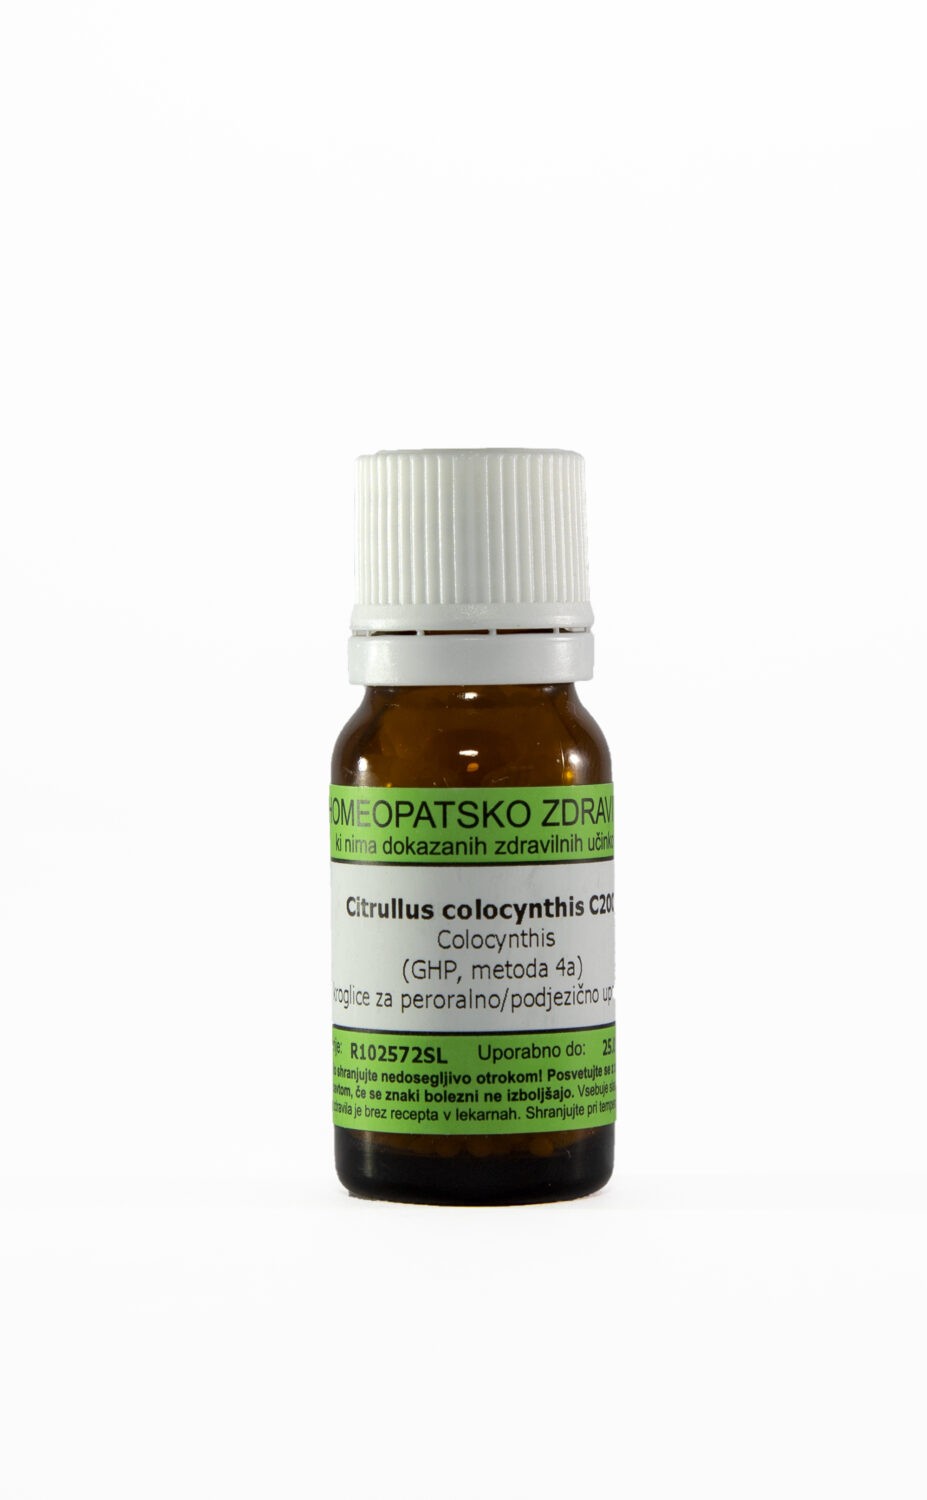 Citrullus colocynthis C12 homeopatske kroglice, 1 g